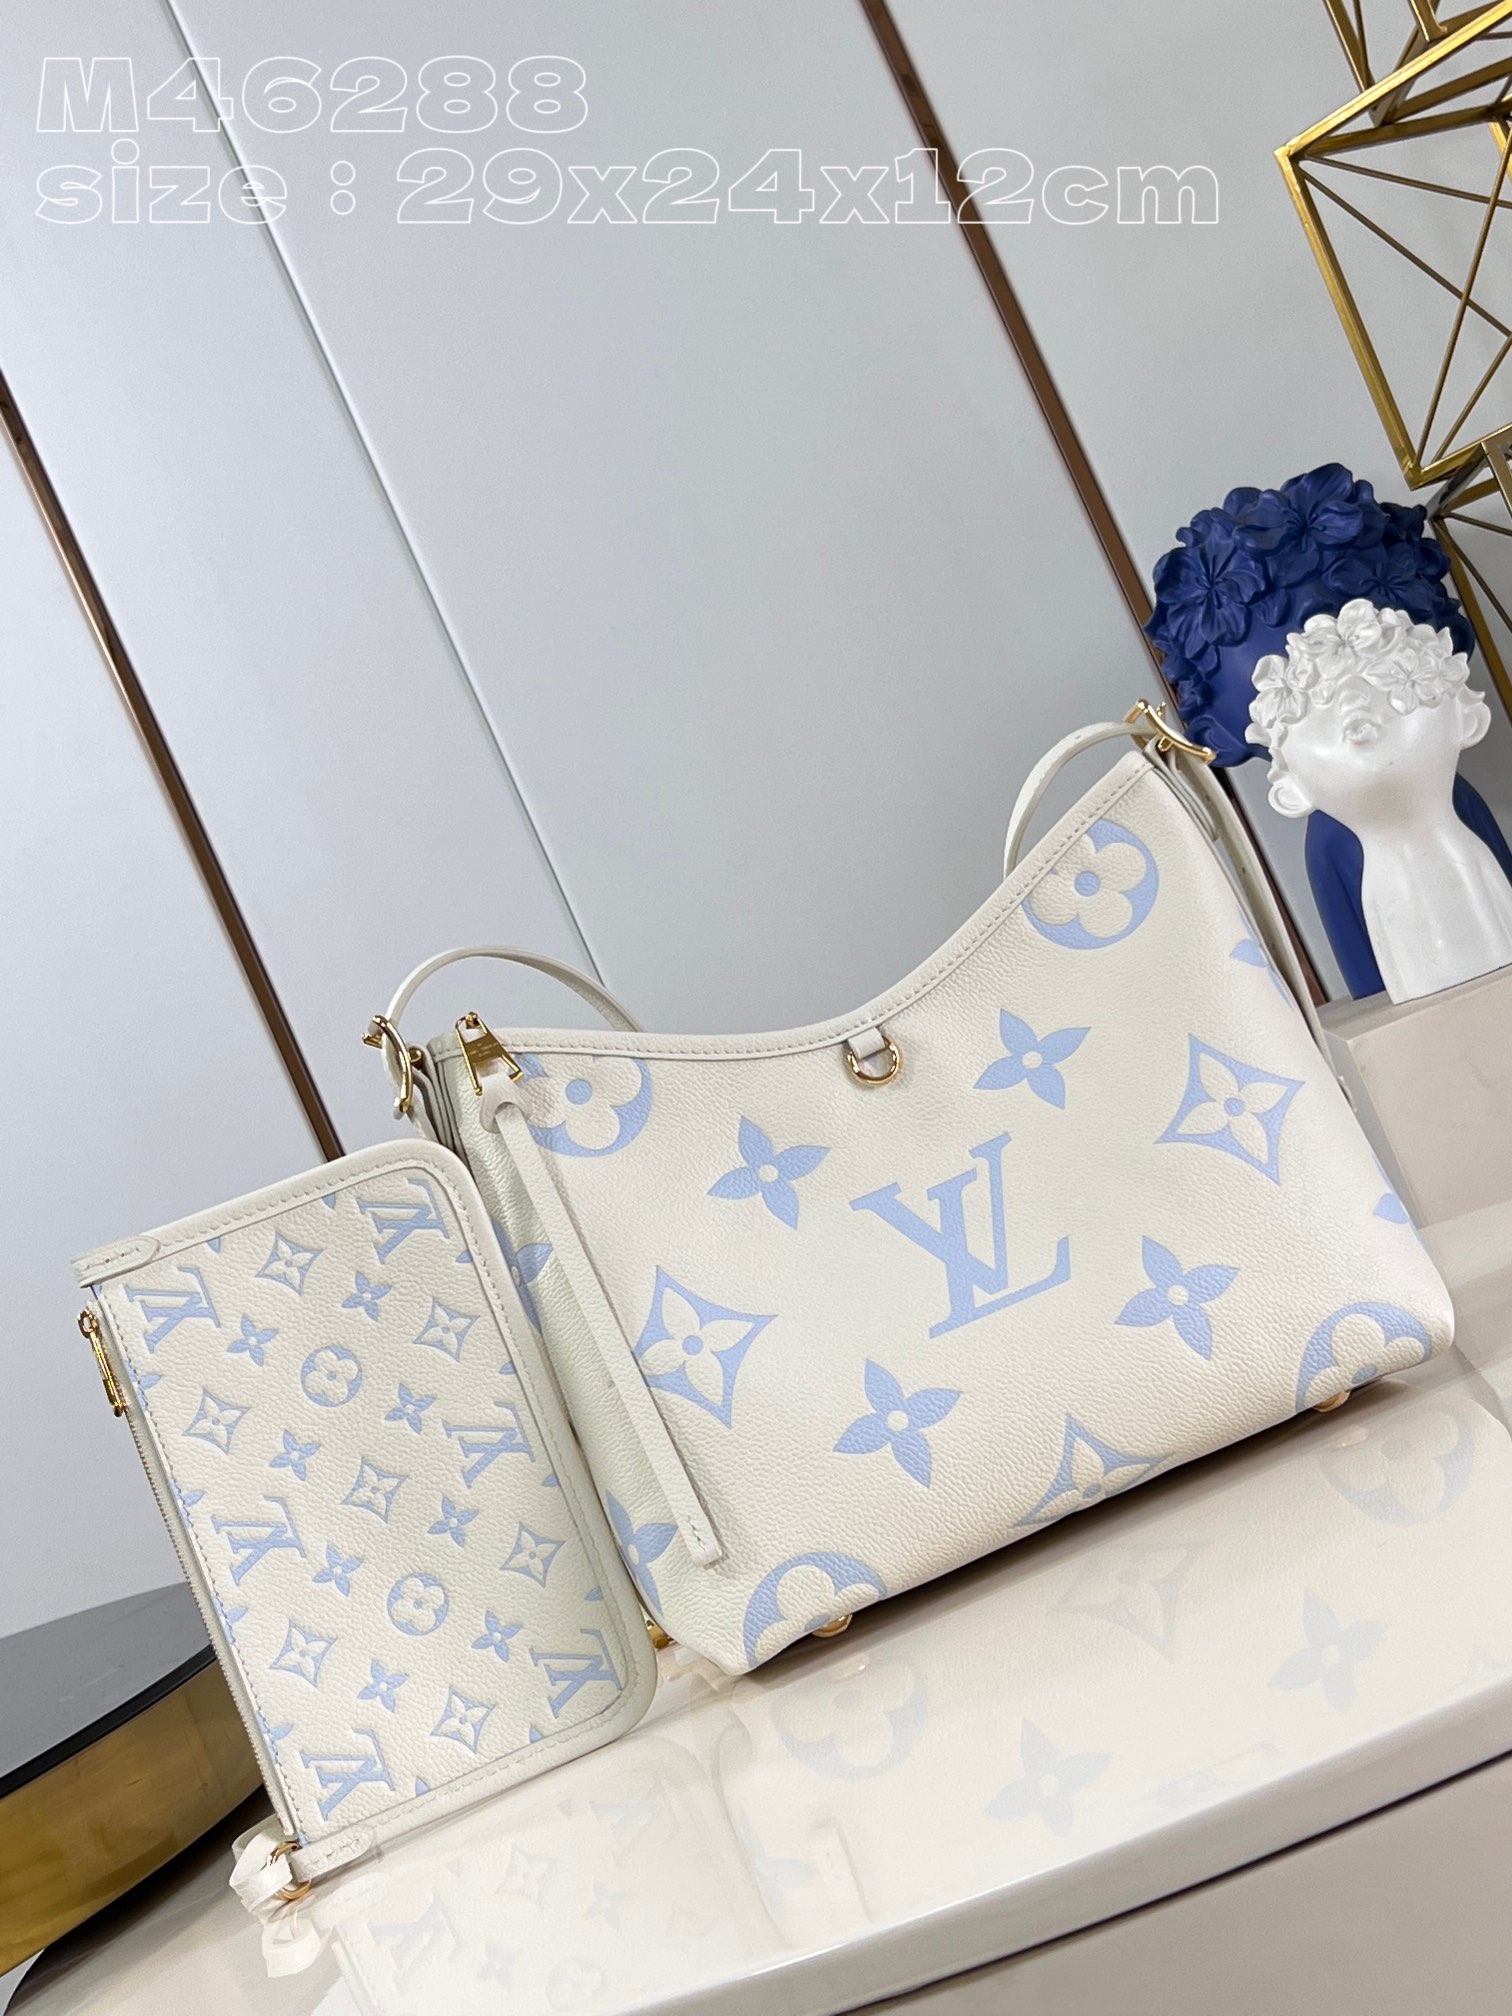 Louis Vuitton Bags Handbags Beige Blue White Empreinte​ M46288